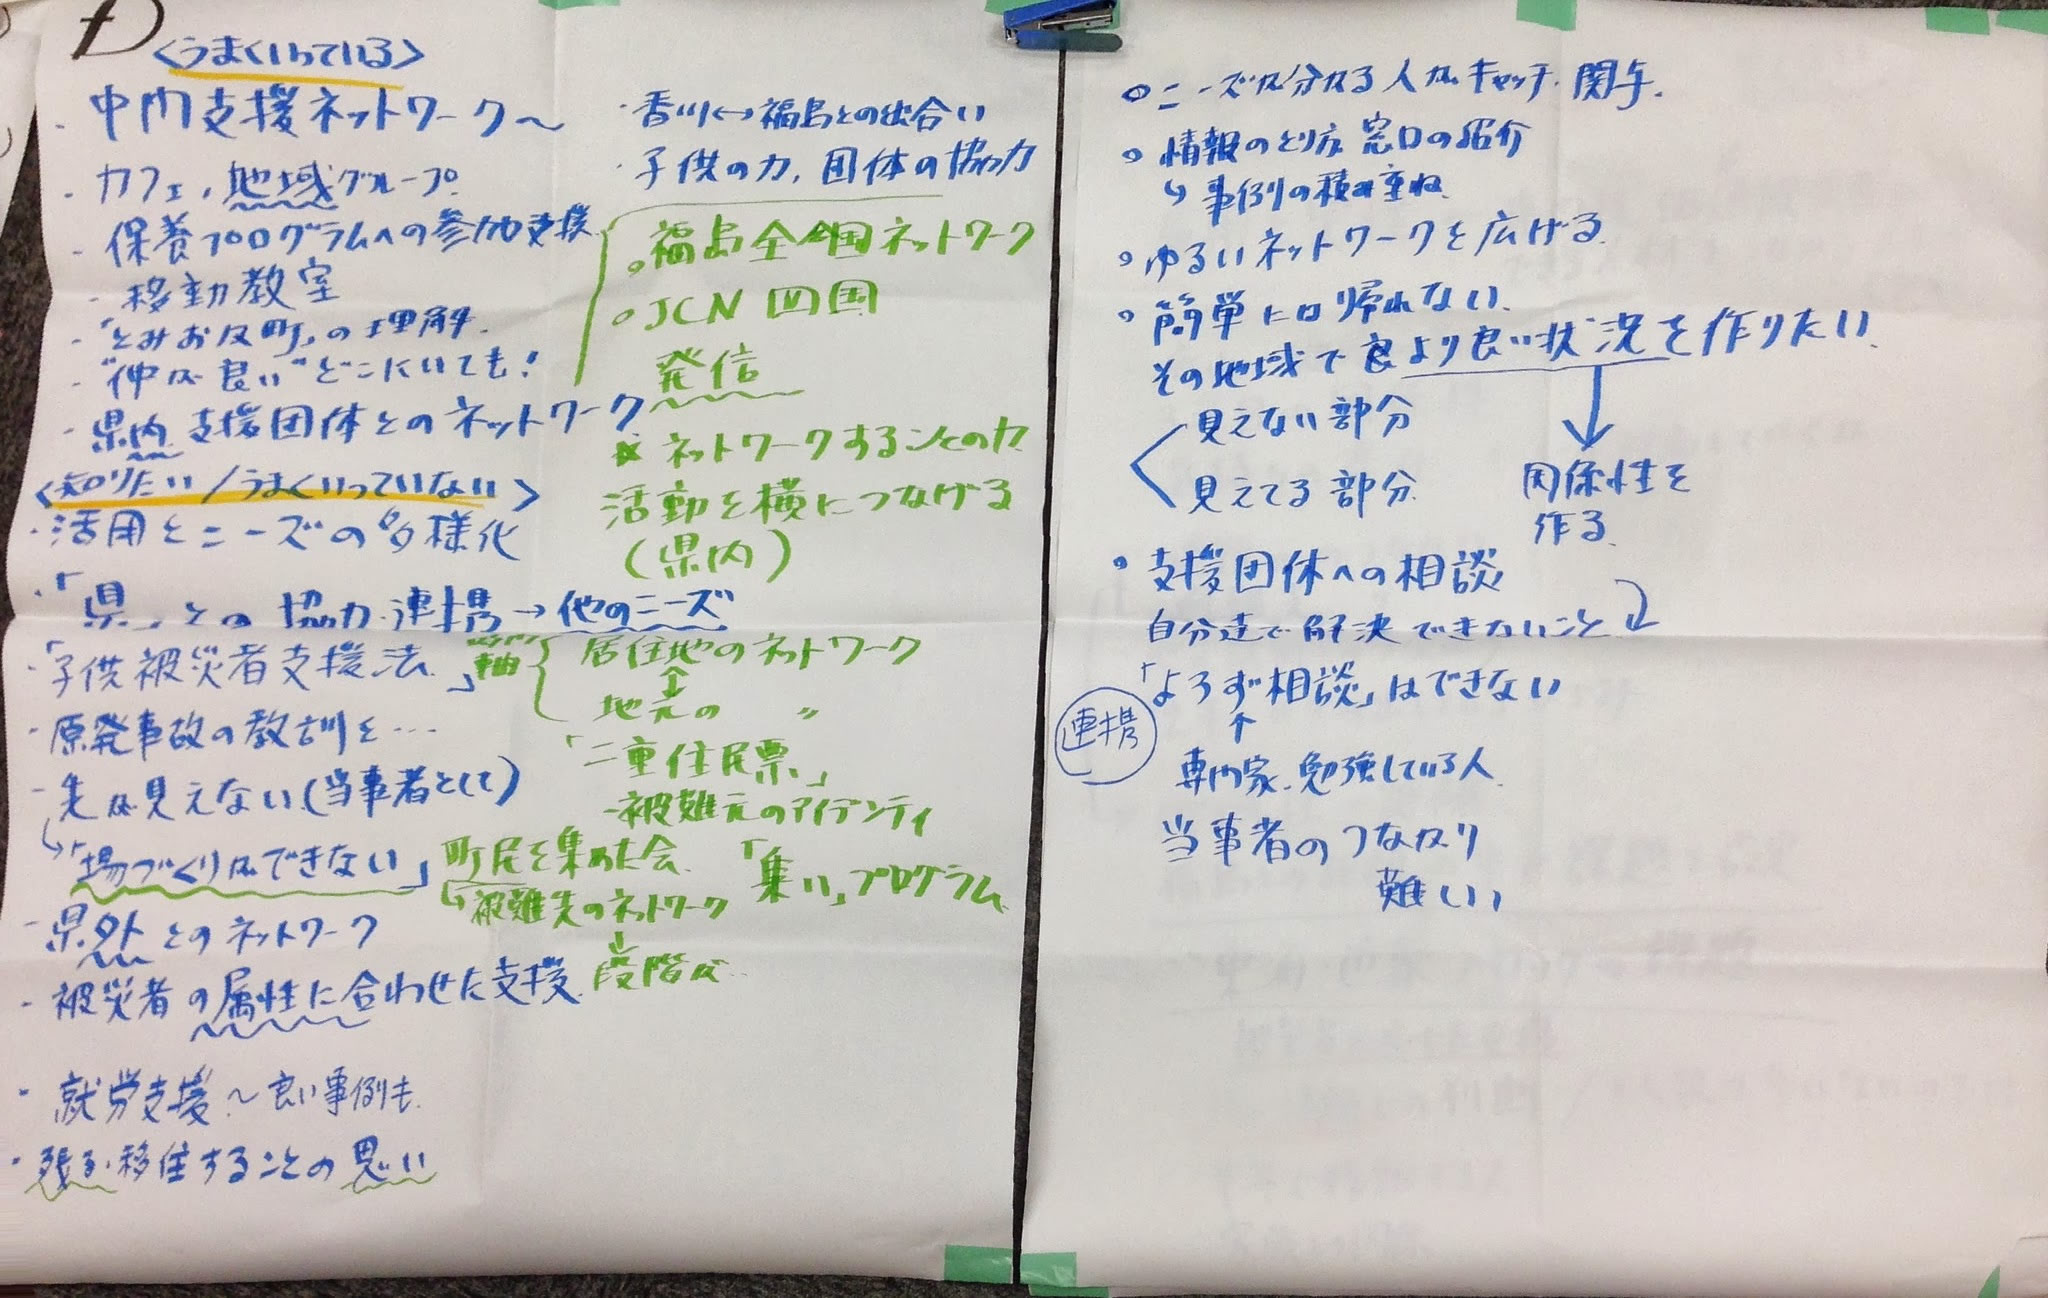 http://www.jpn-civil.net/2014/activity/kouiki/docfiles/20130724_m05.jpg